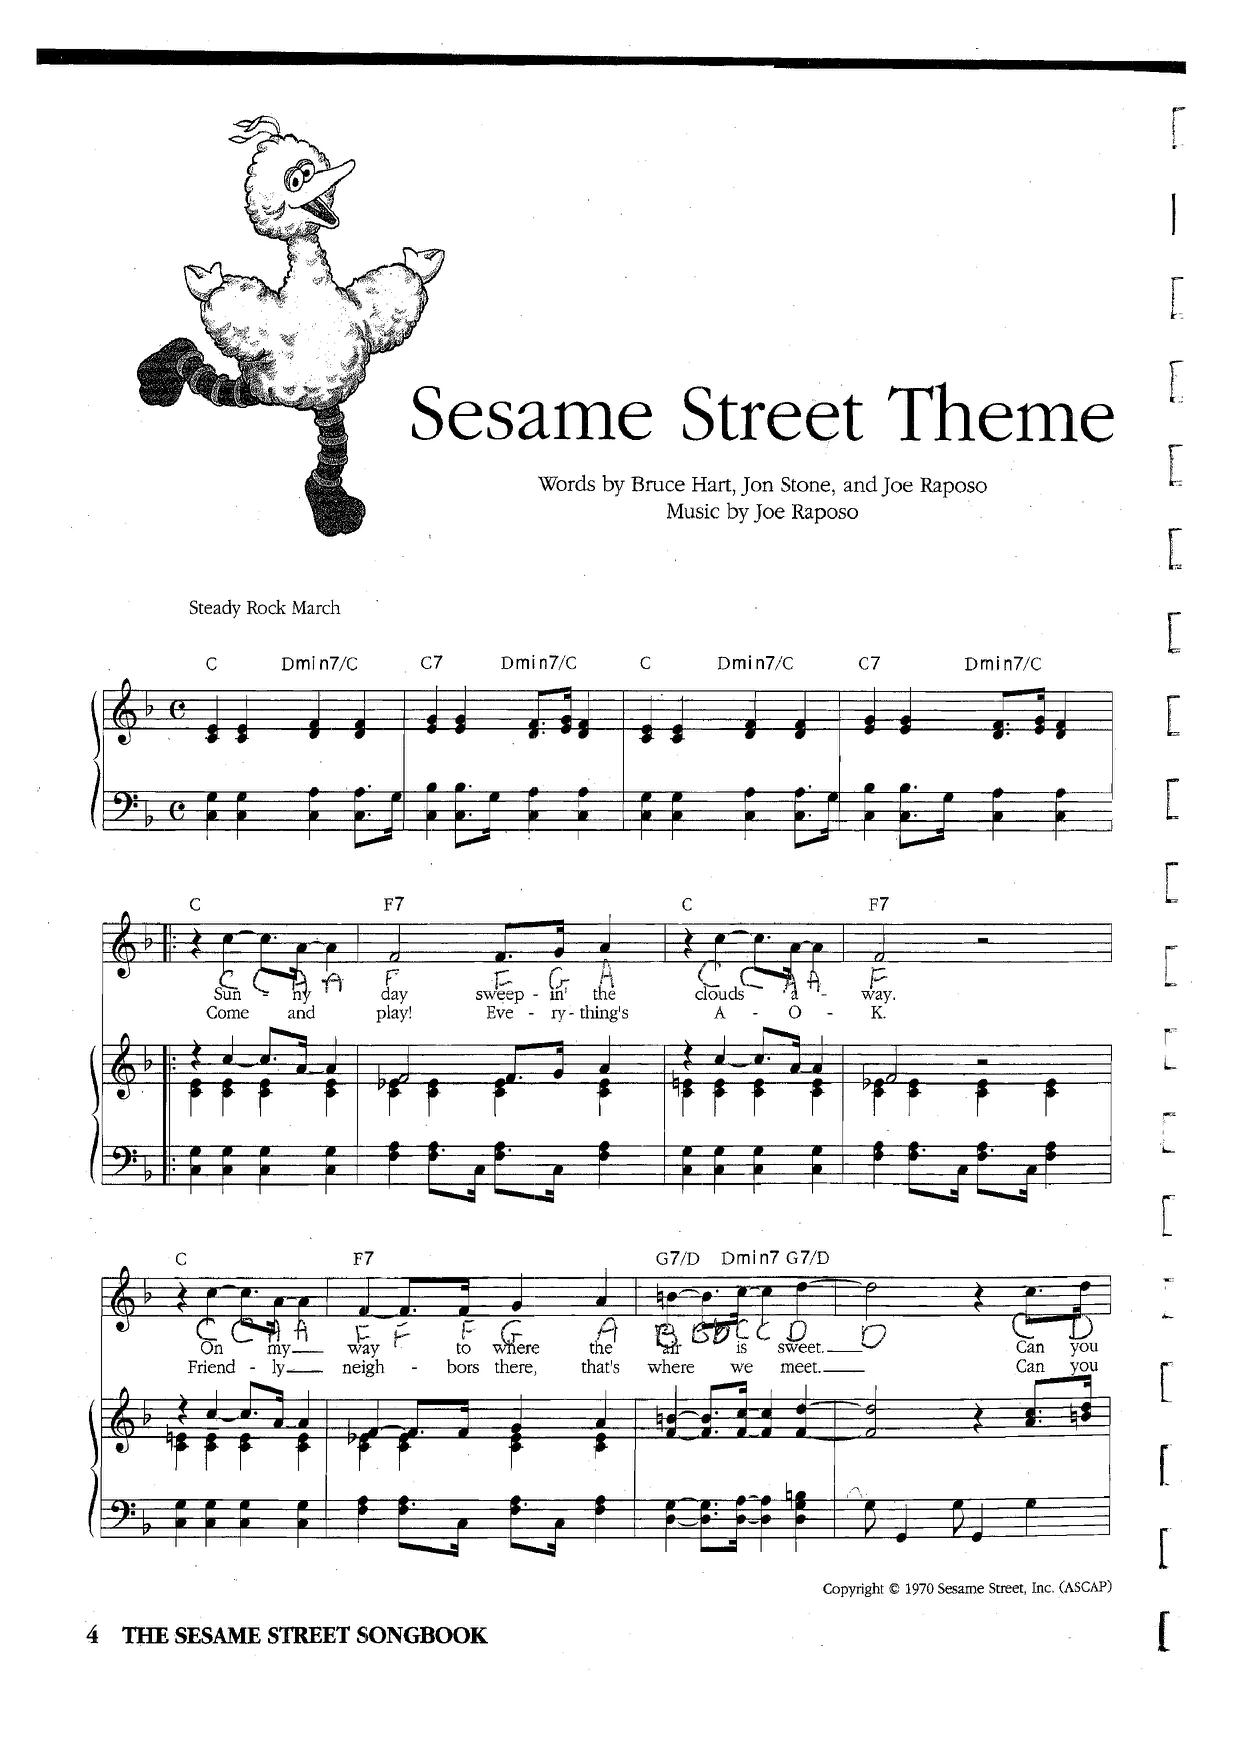 Sesame Street Theme Score